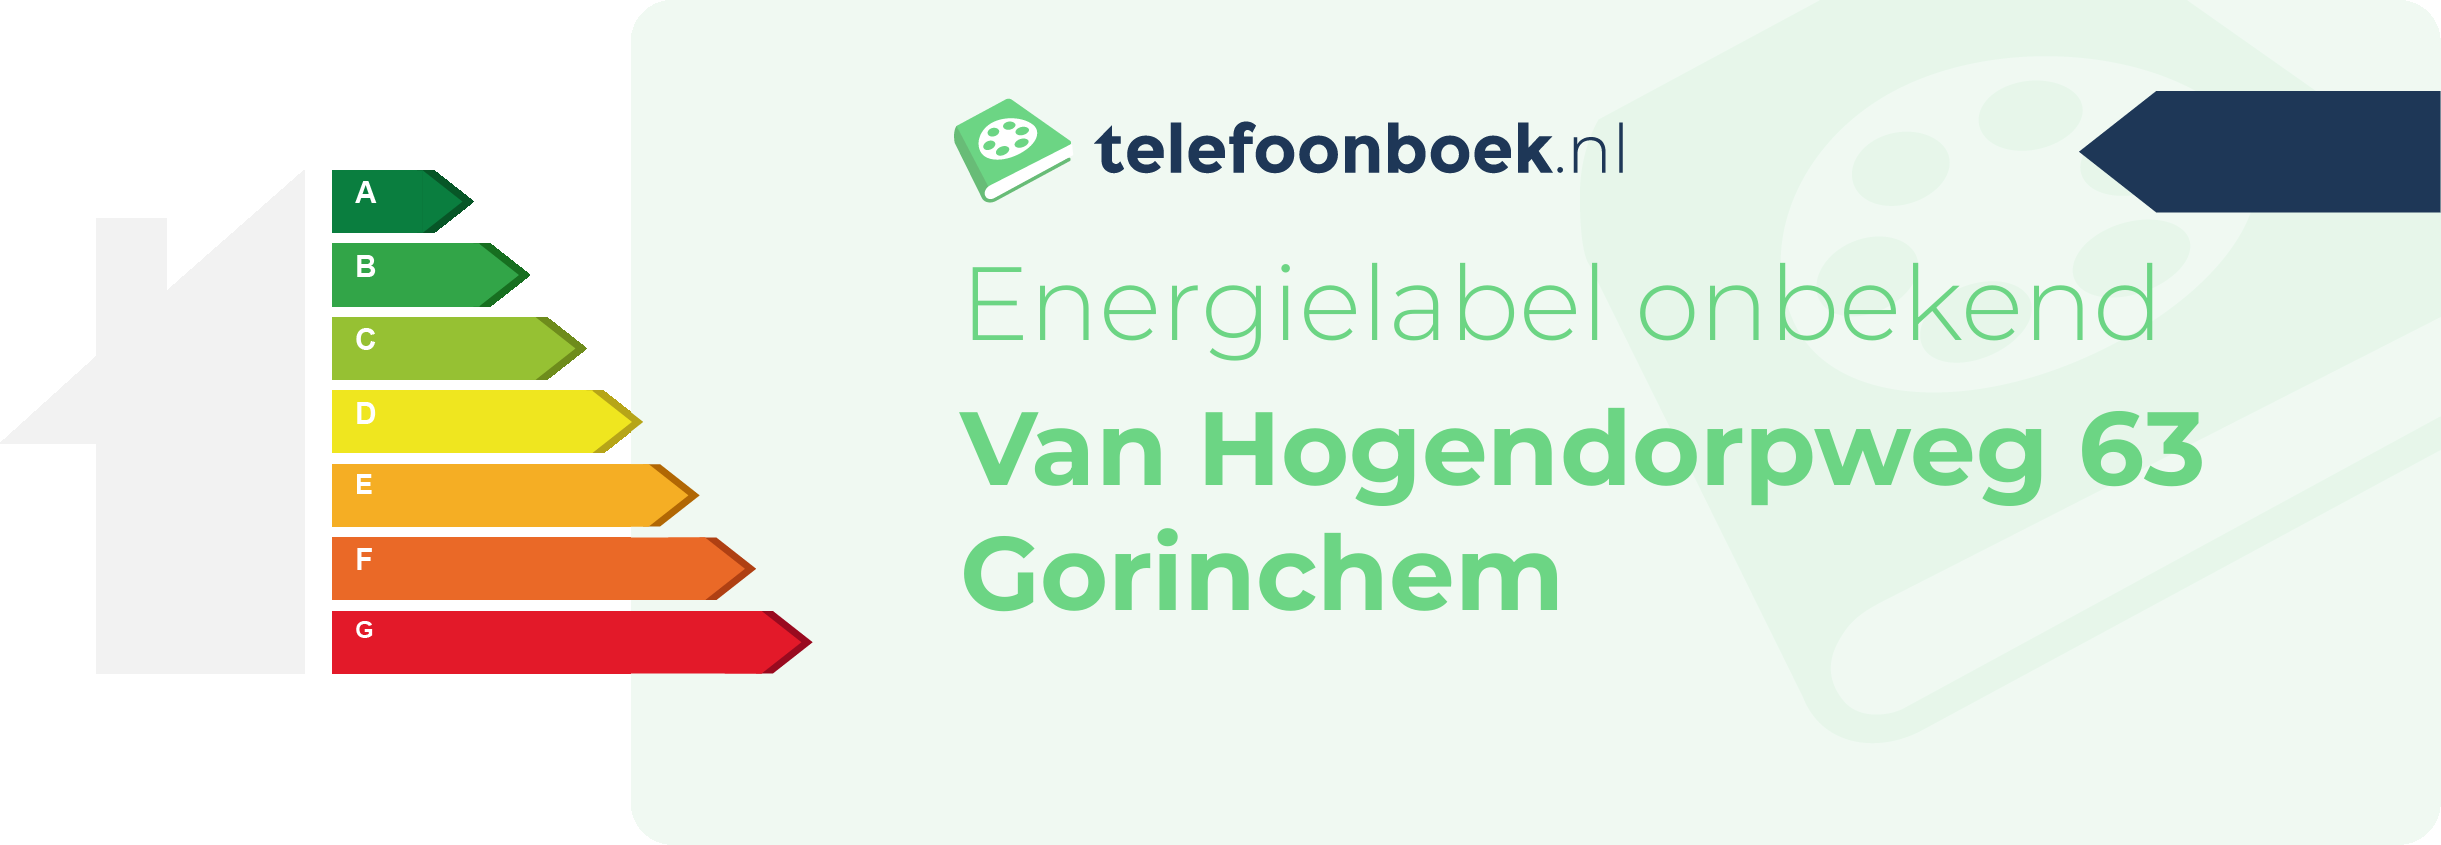 Energielabel Van Hogendorpweg 63 Gorinchem